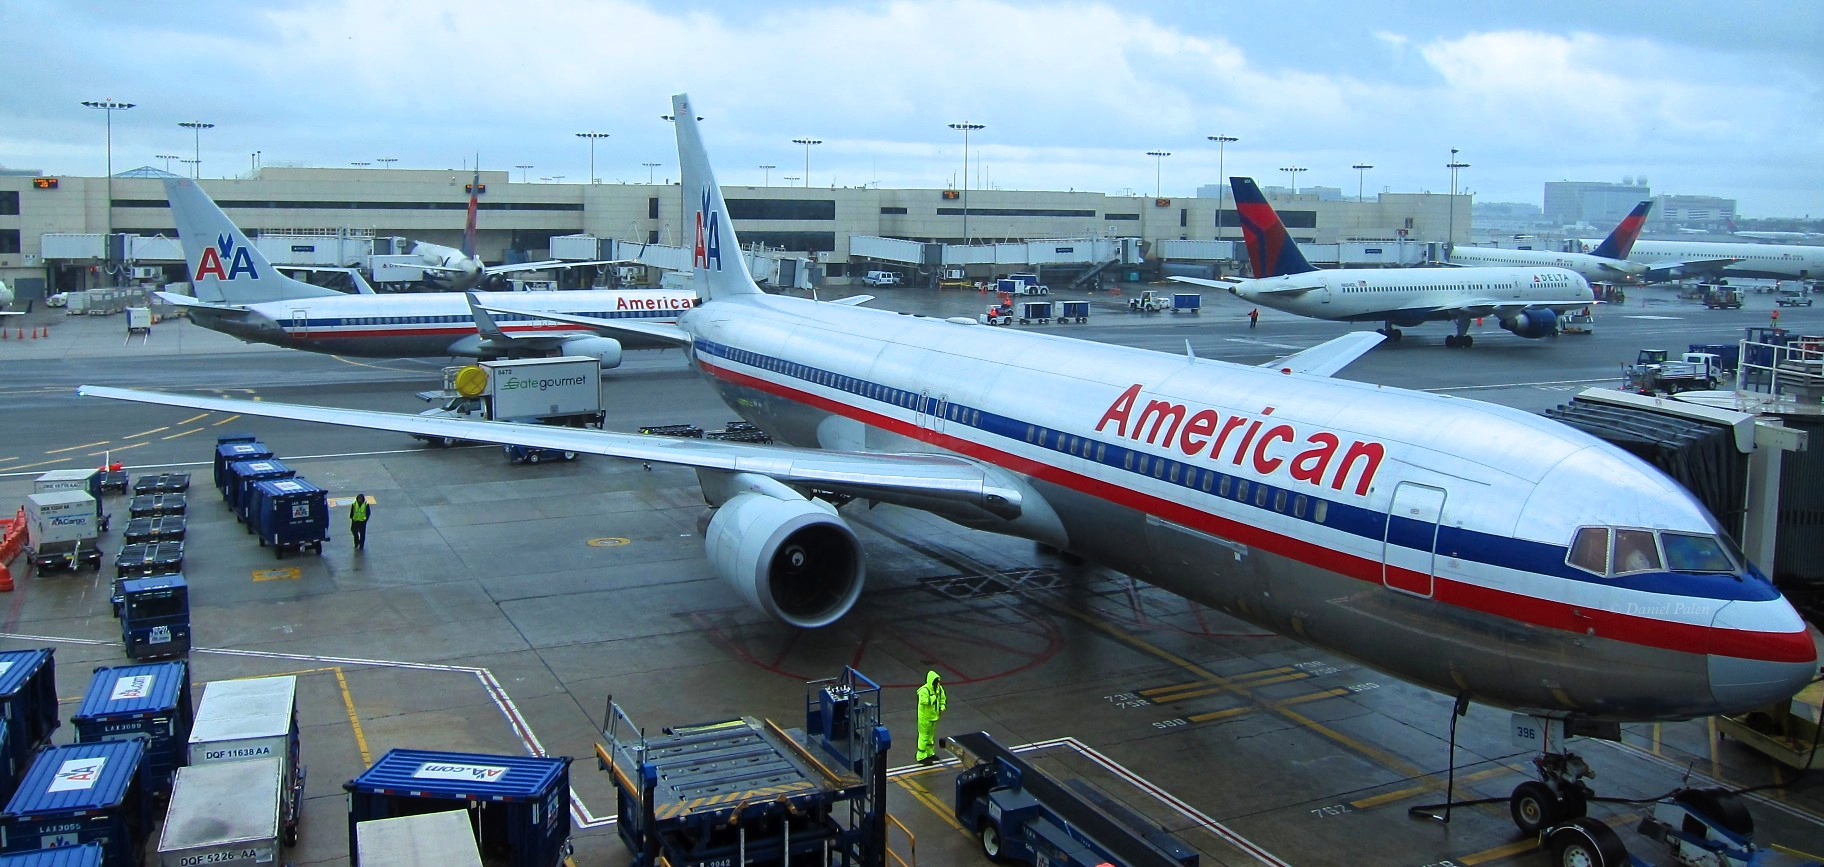 American Airlines Flying a Boeing 767 Miami-Las Vegas until June